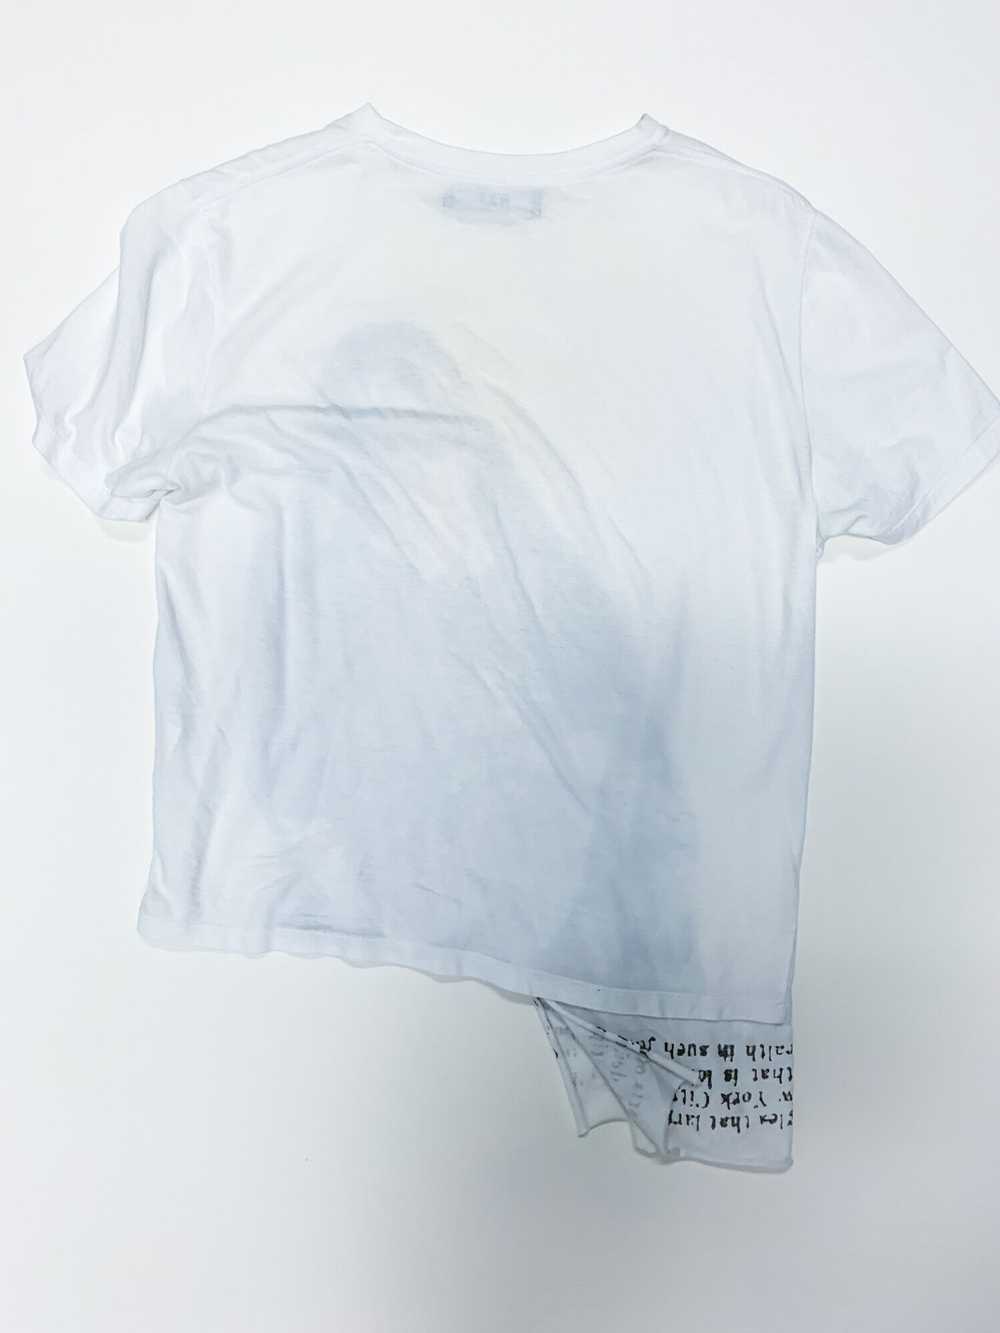 Raf by Raf Simons Cutoff Print T-Shirt "Yesterday" - image 5